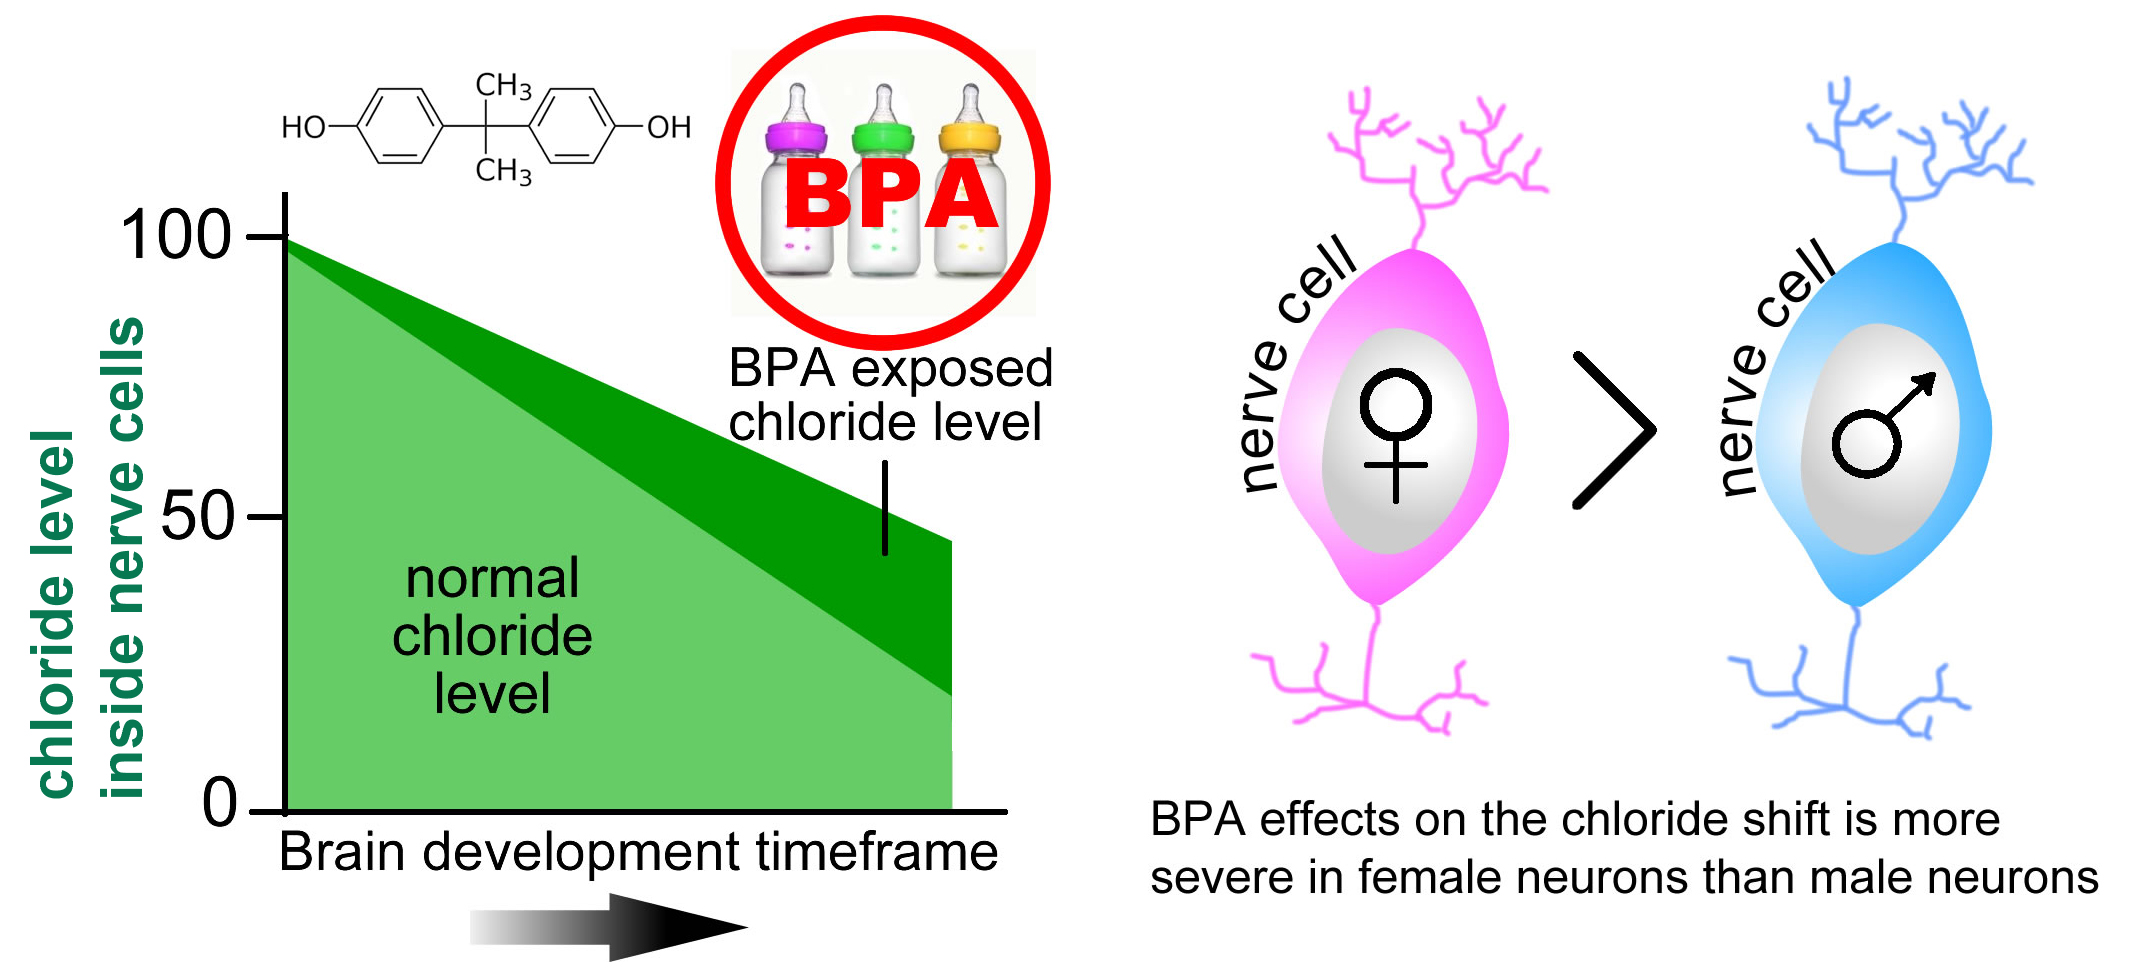 Bpa May Affect The Developing Brain By Disrupting Gene Regulation